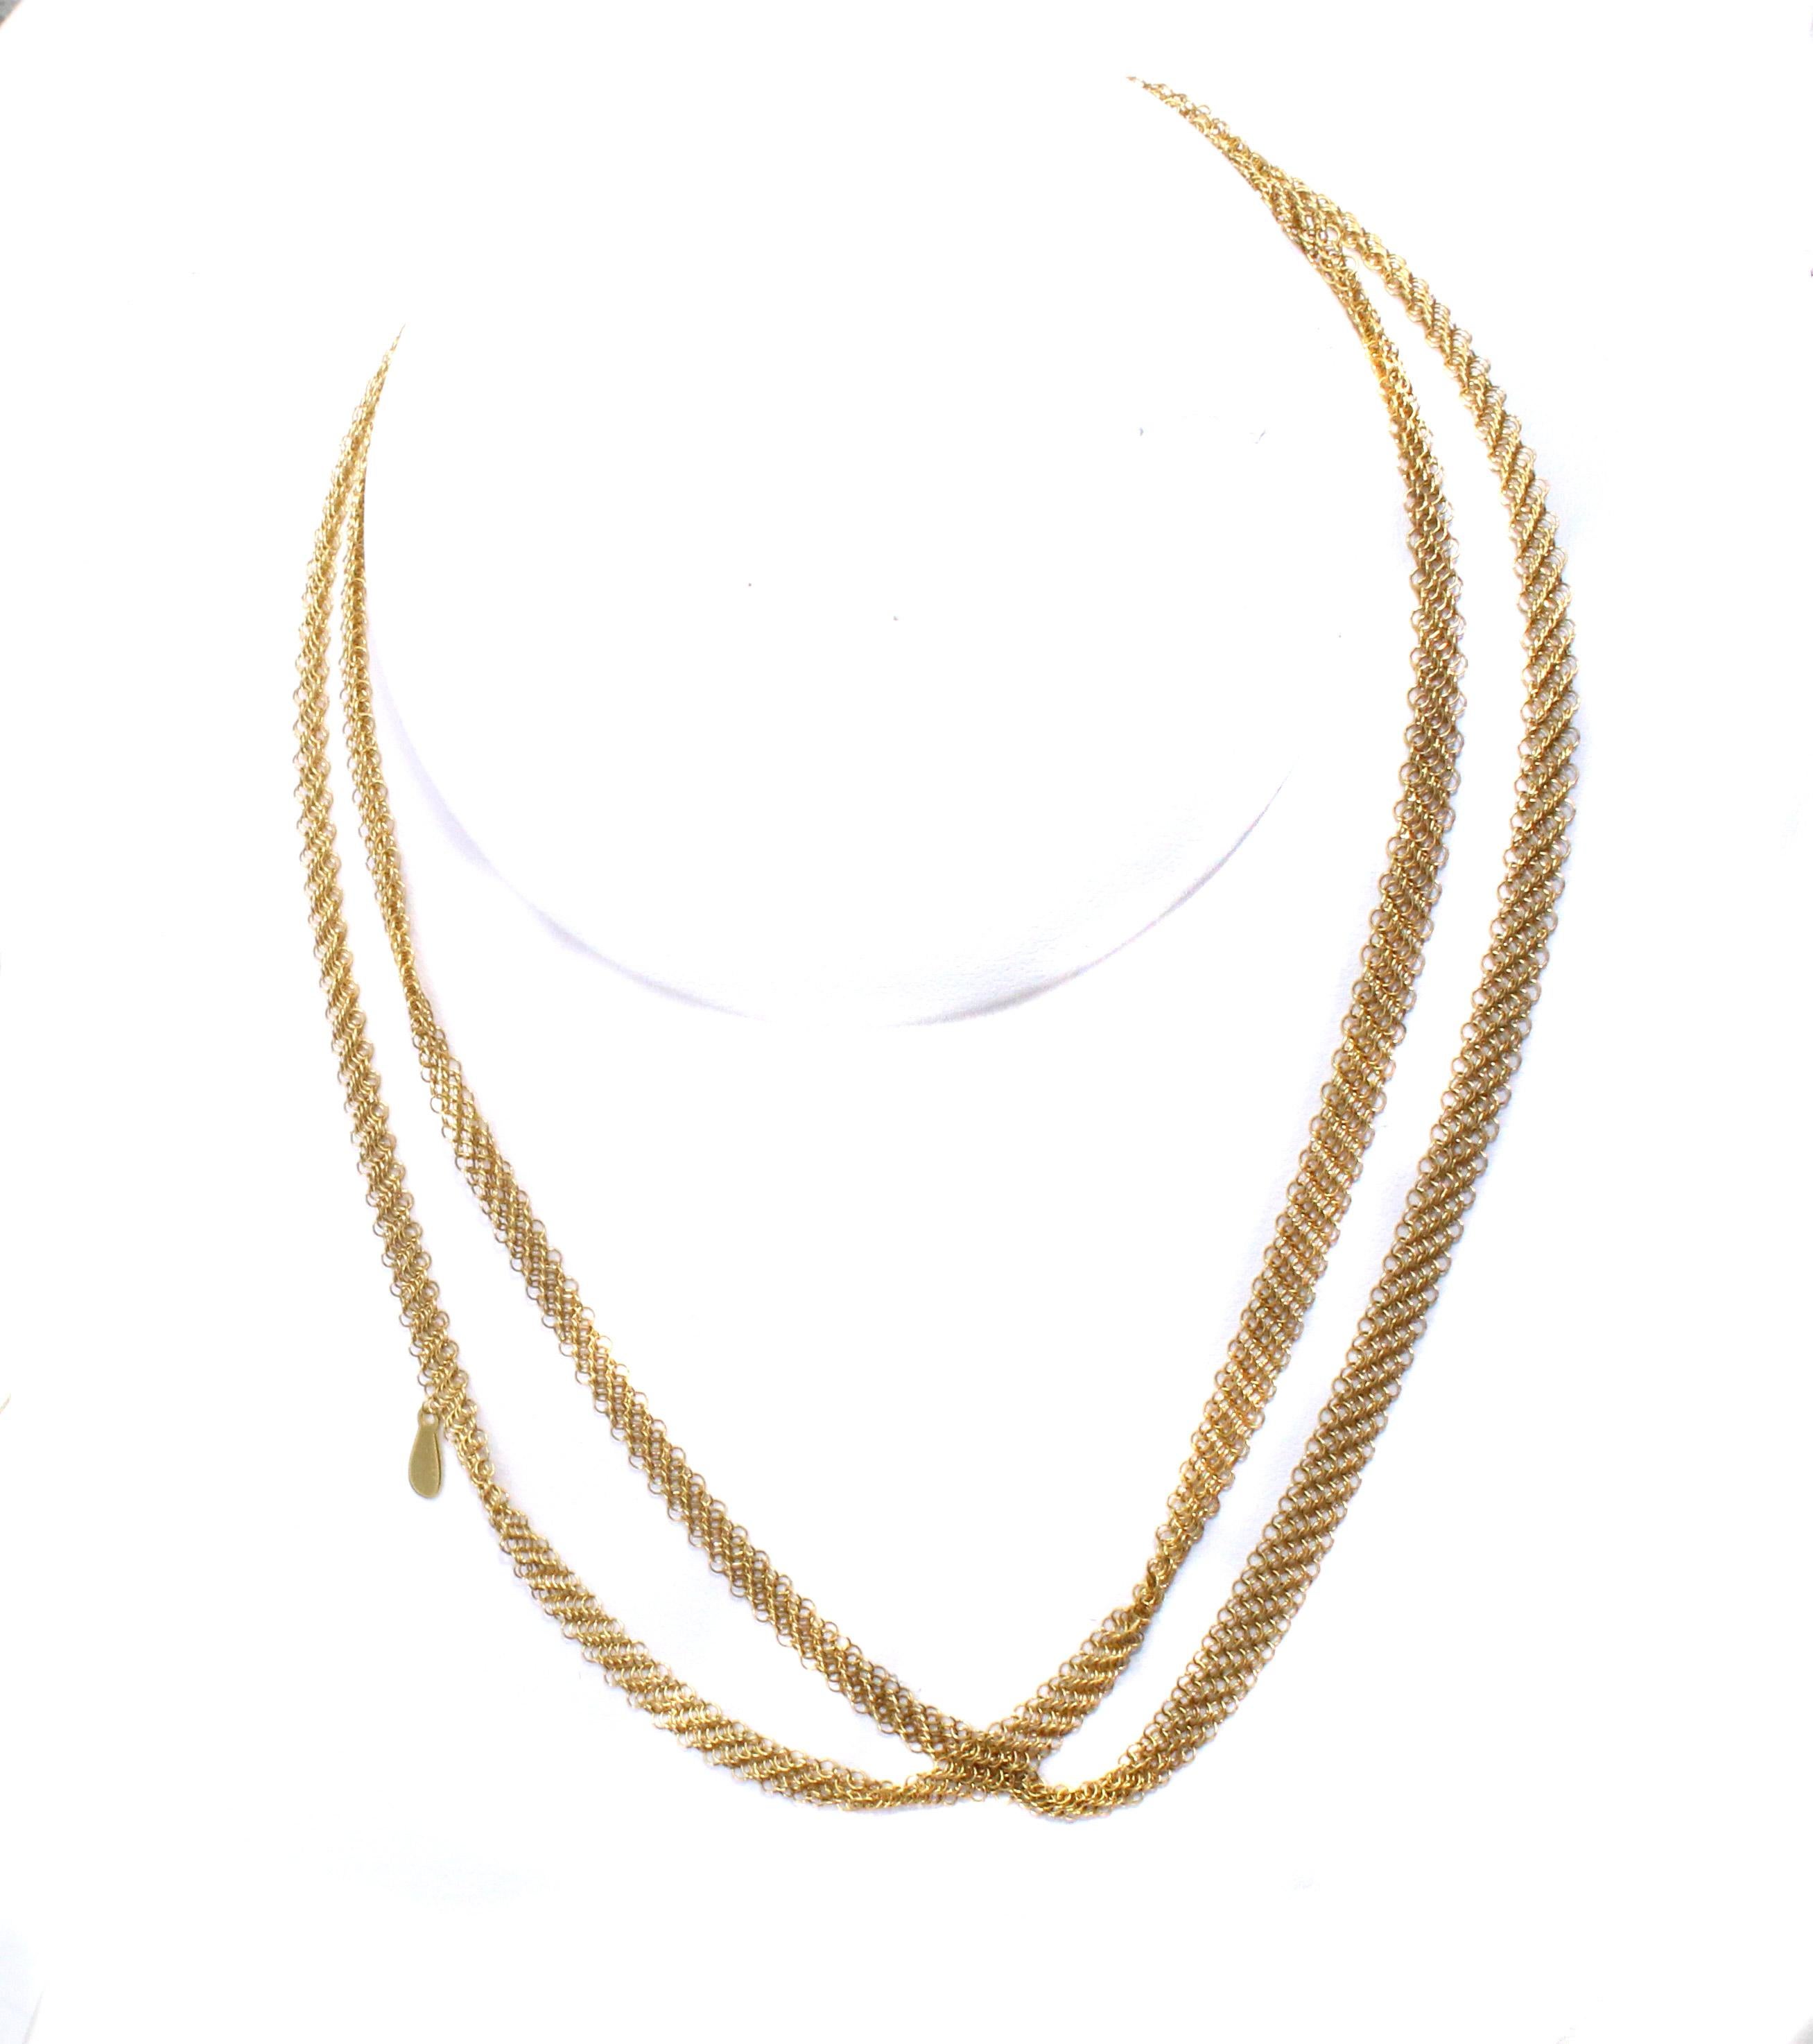 Elsa Peretti for Tiffany & Co. 18 Karat Long Mesh Necklace 2